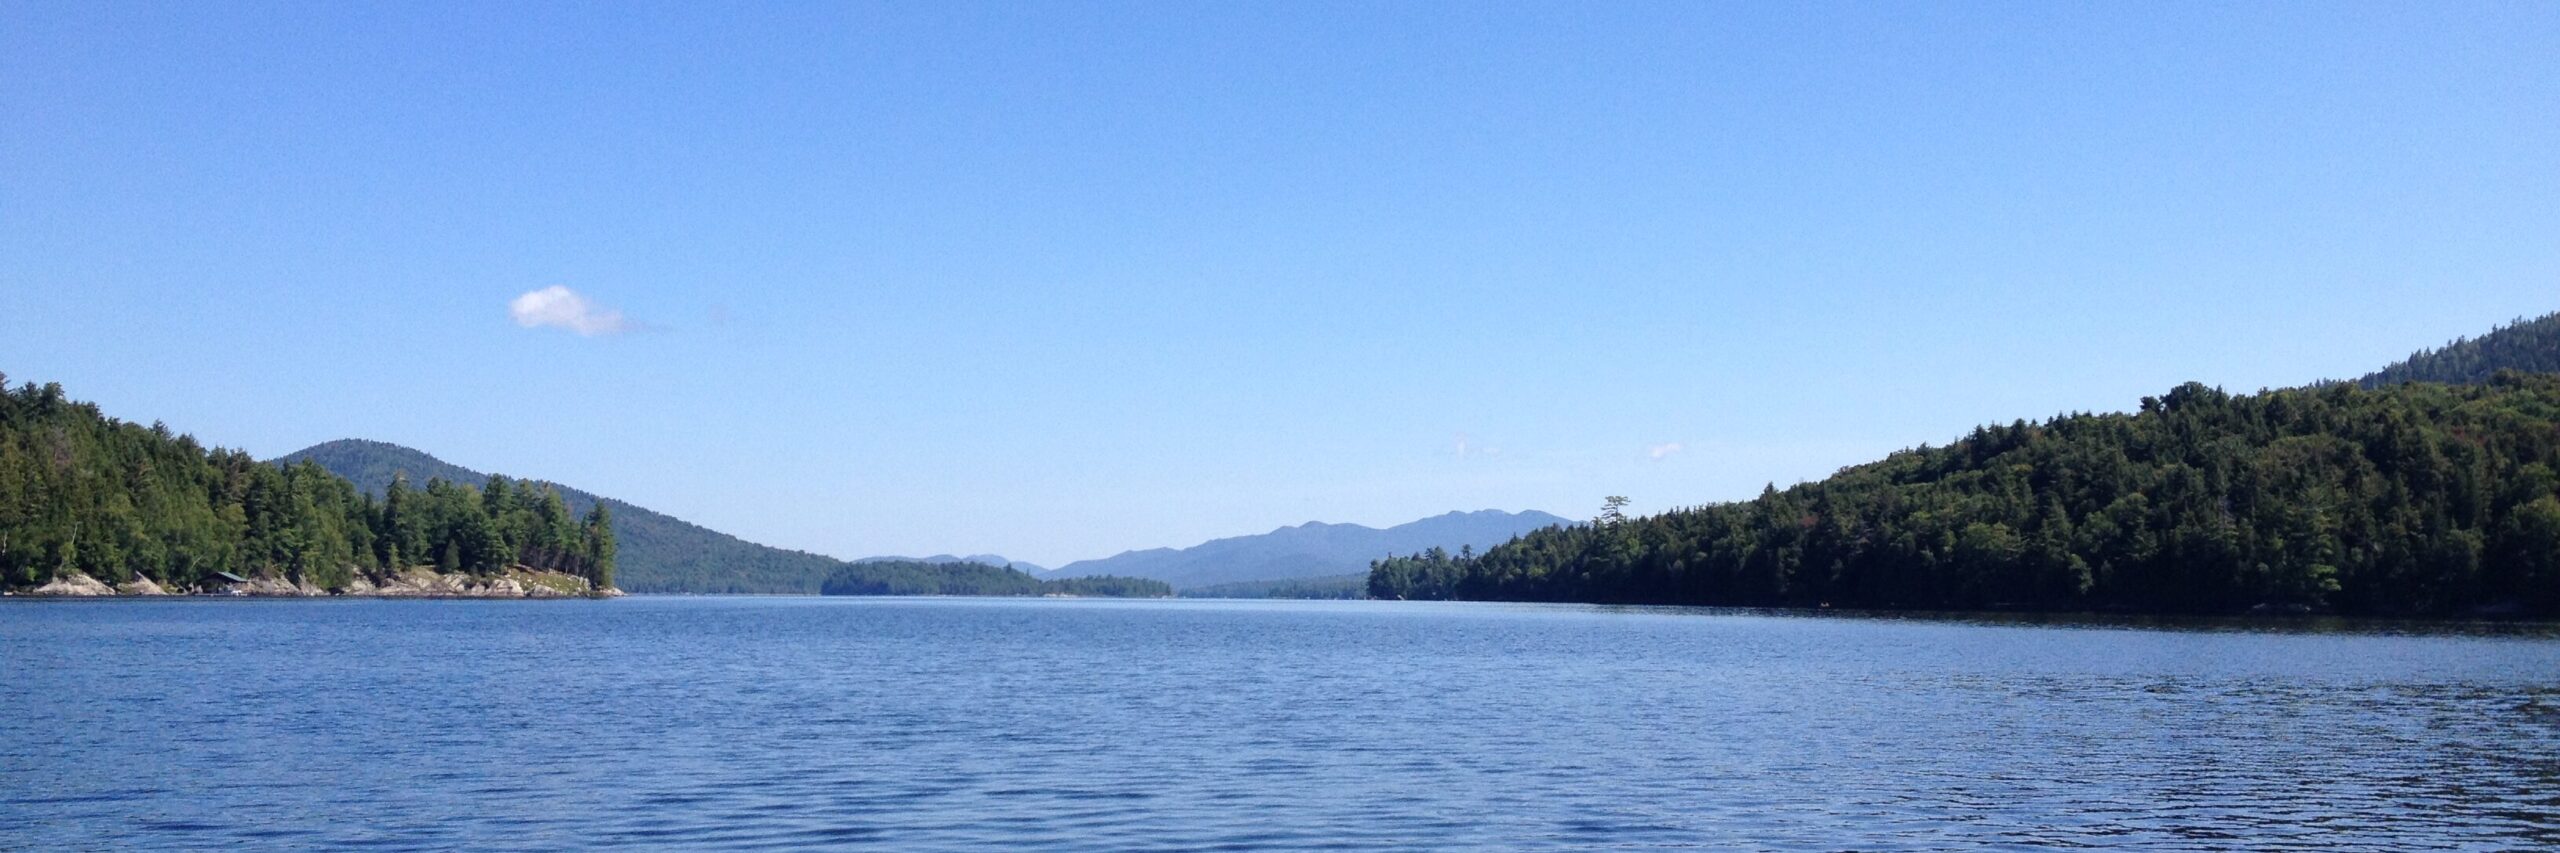 Blue lake nestled between green mountains.